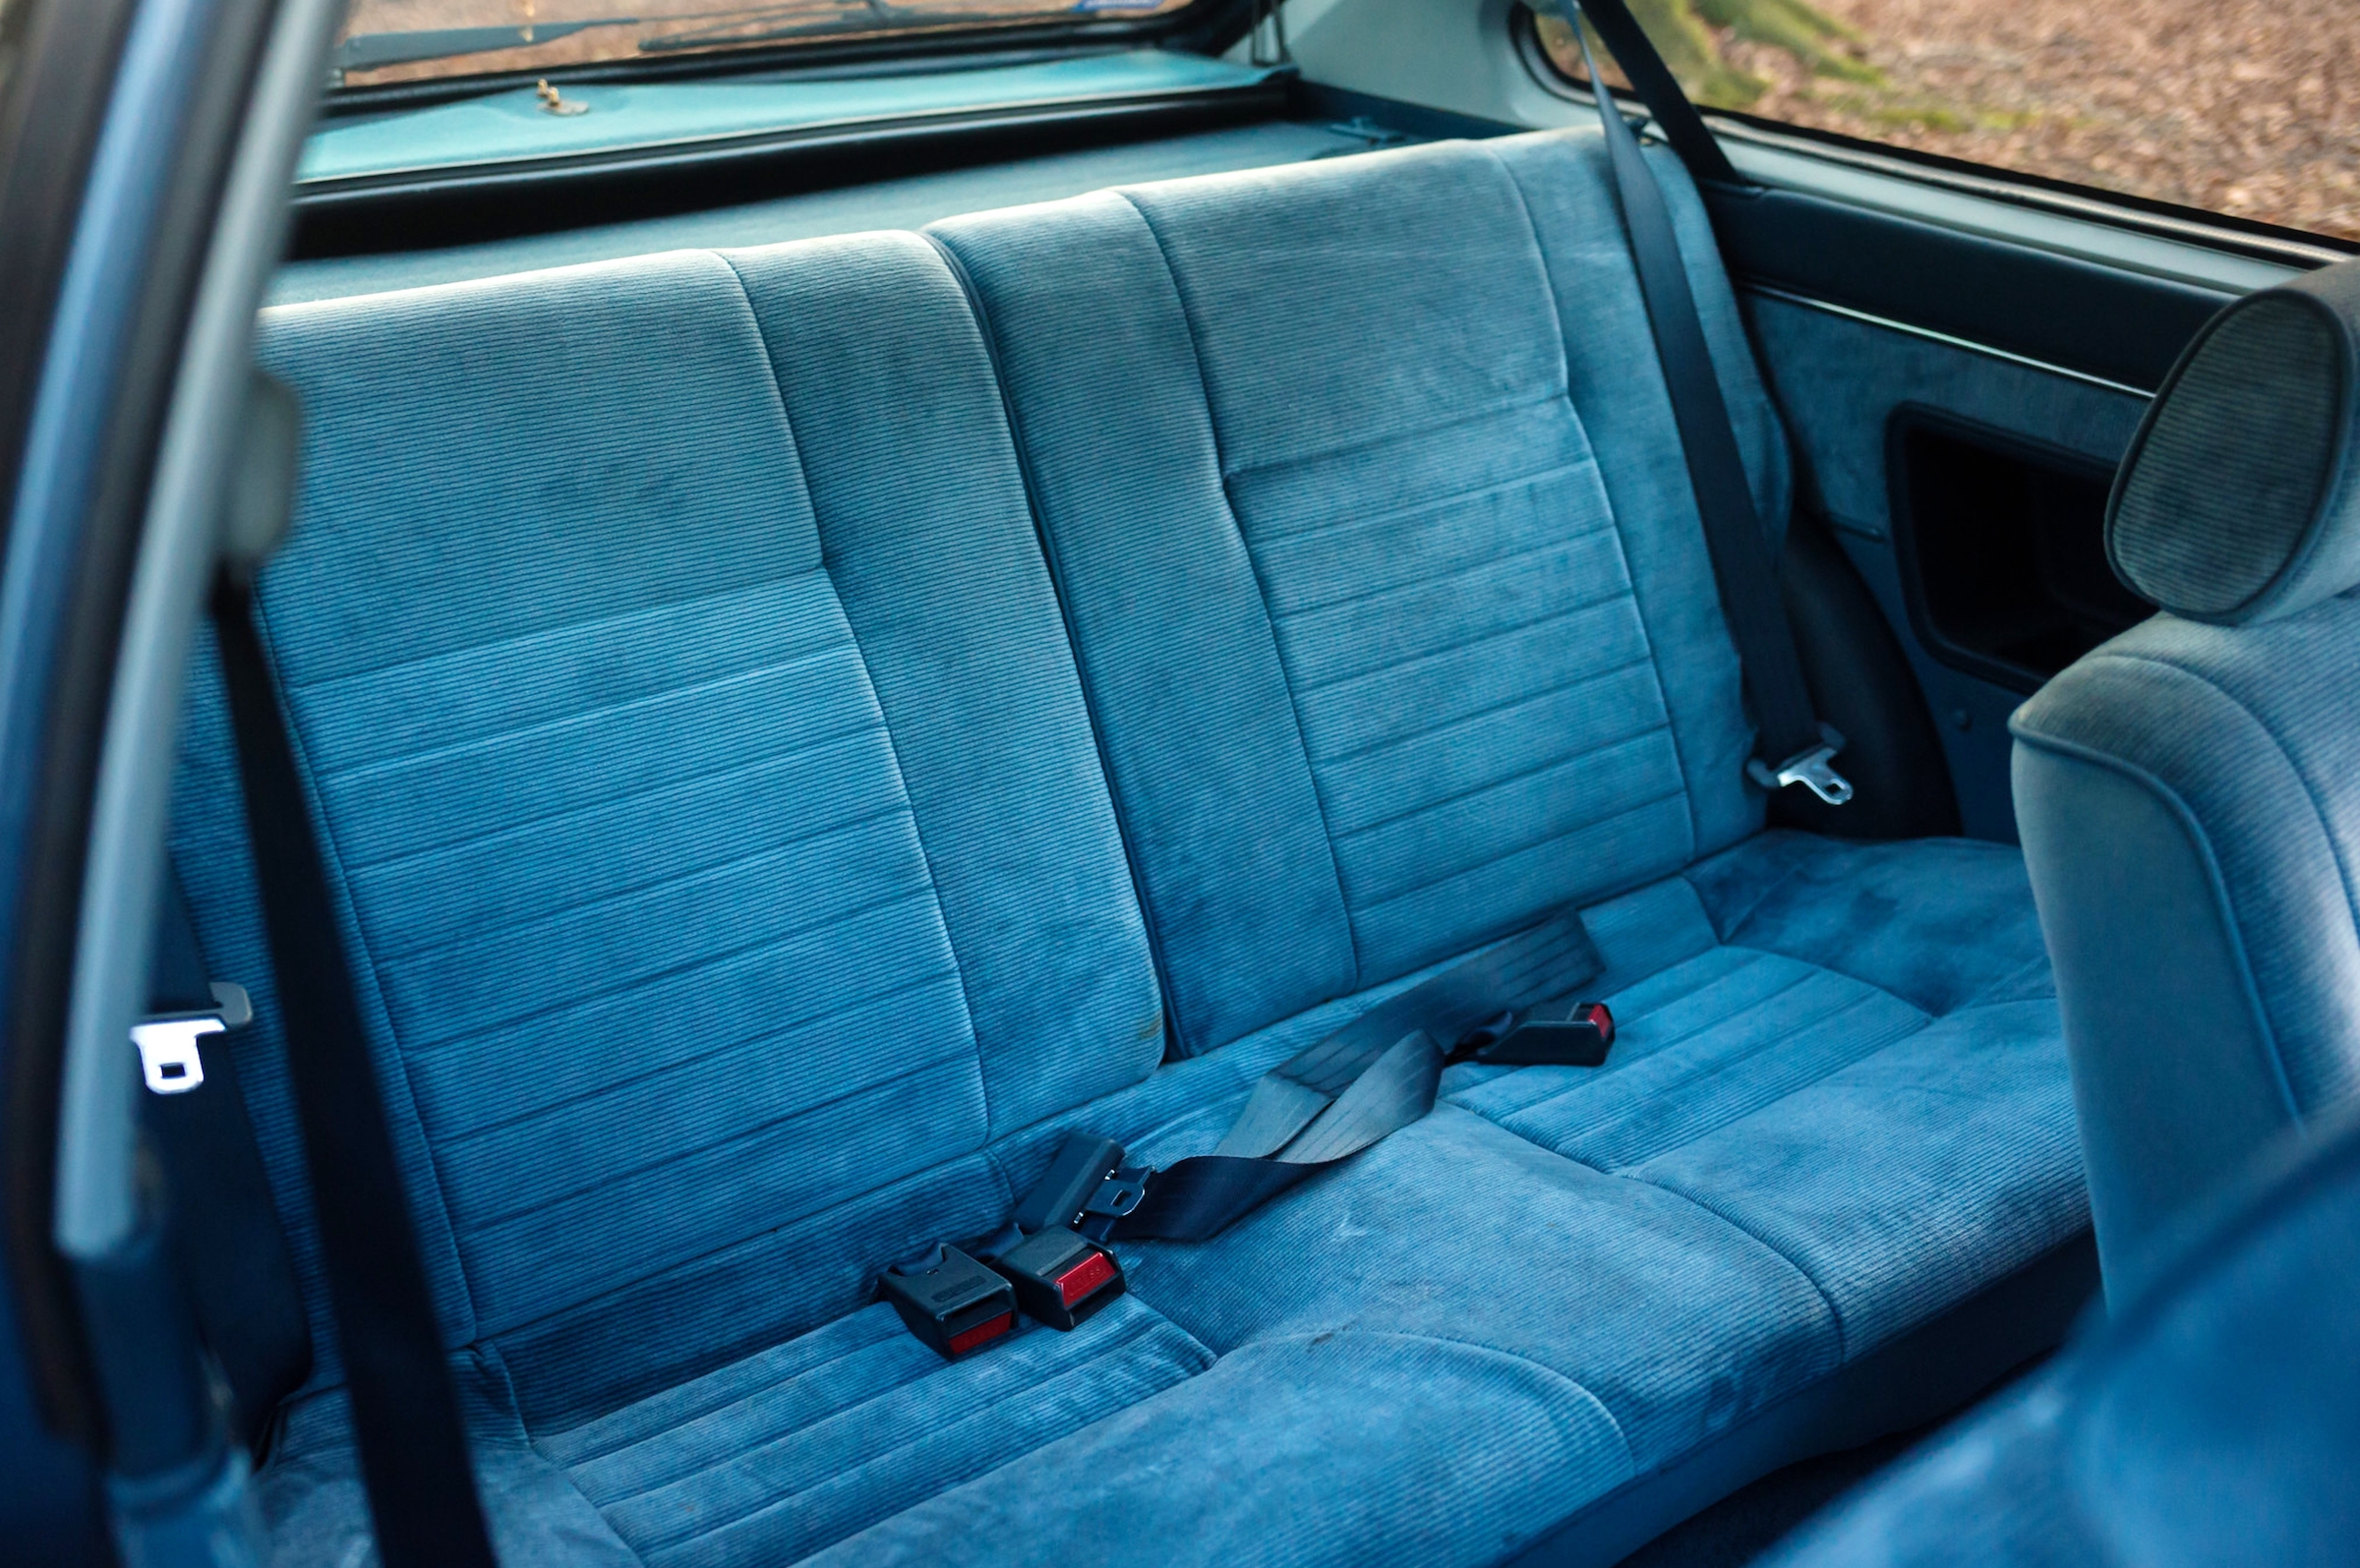 1984 Honda Accord rear seats